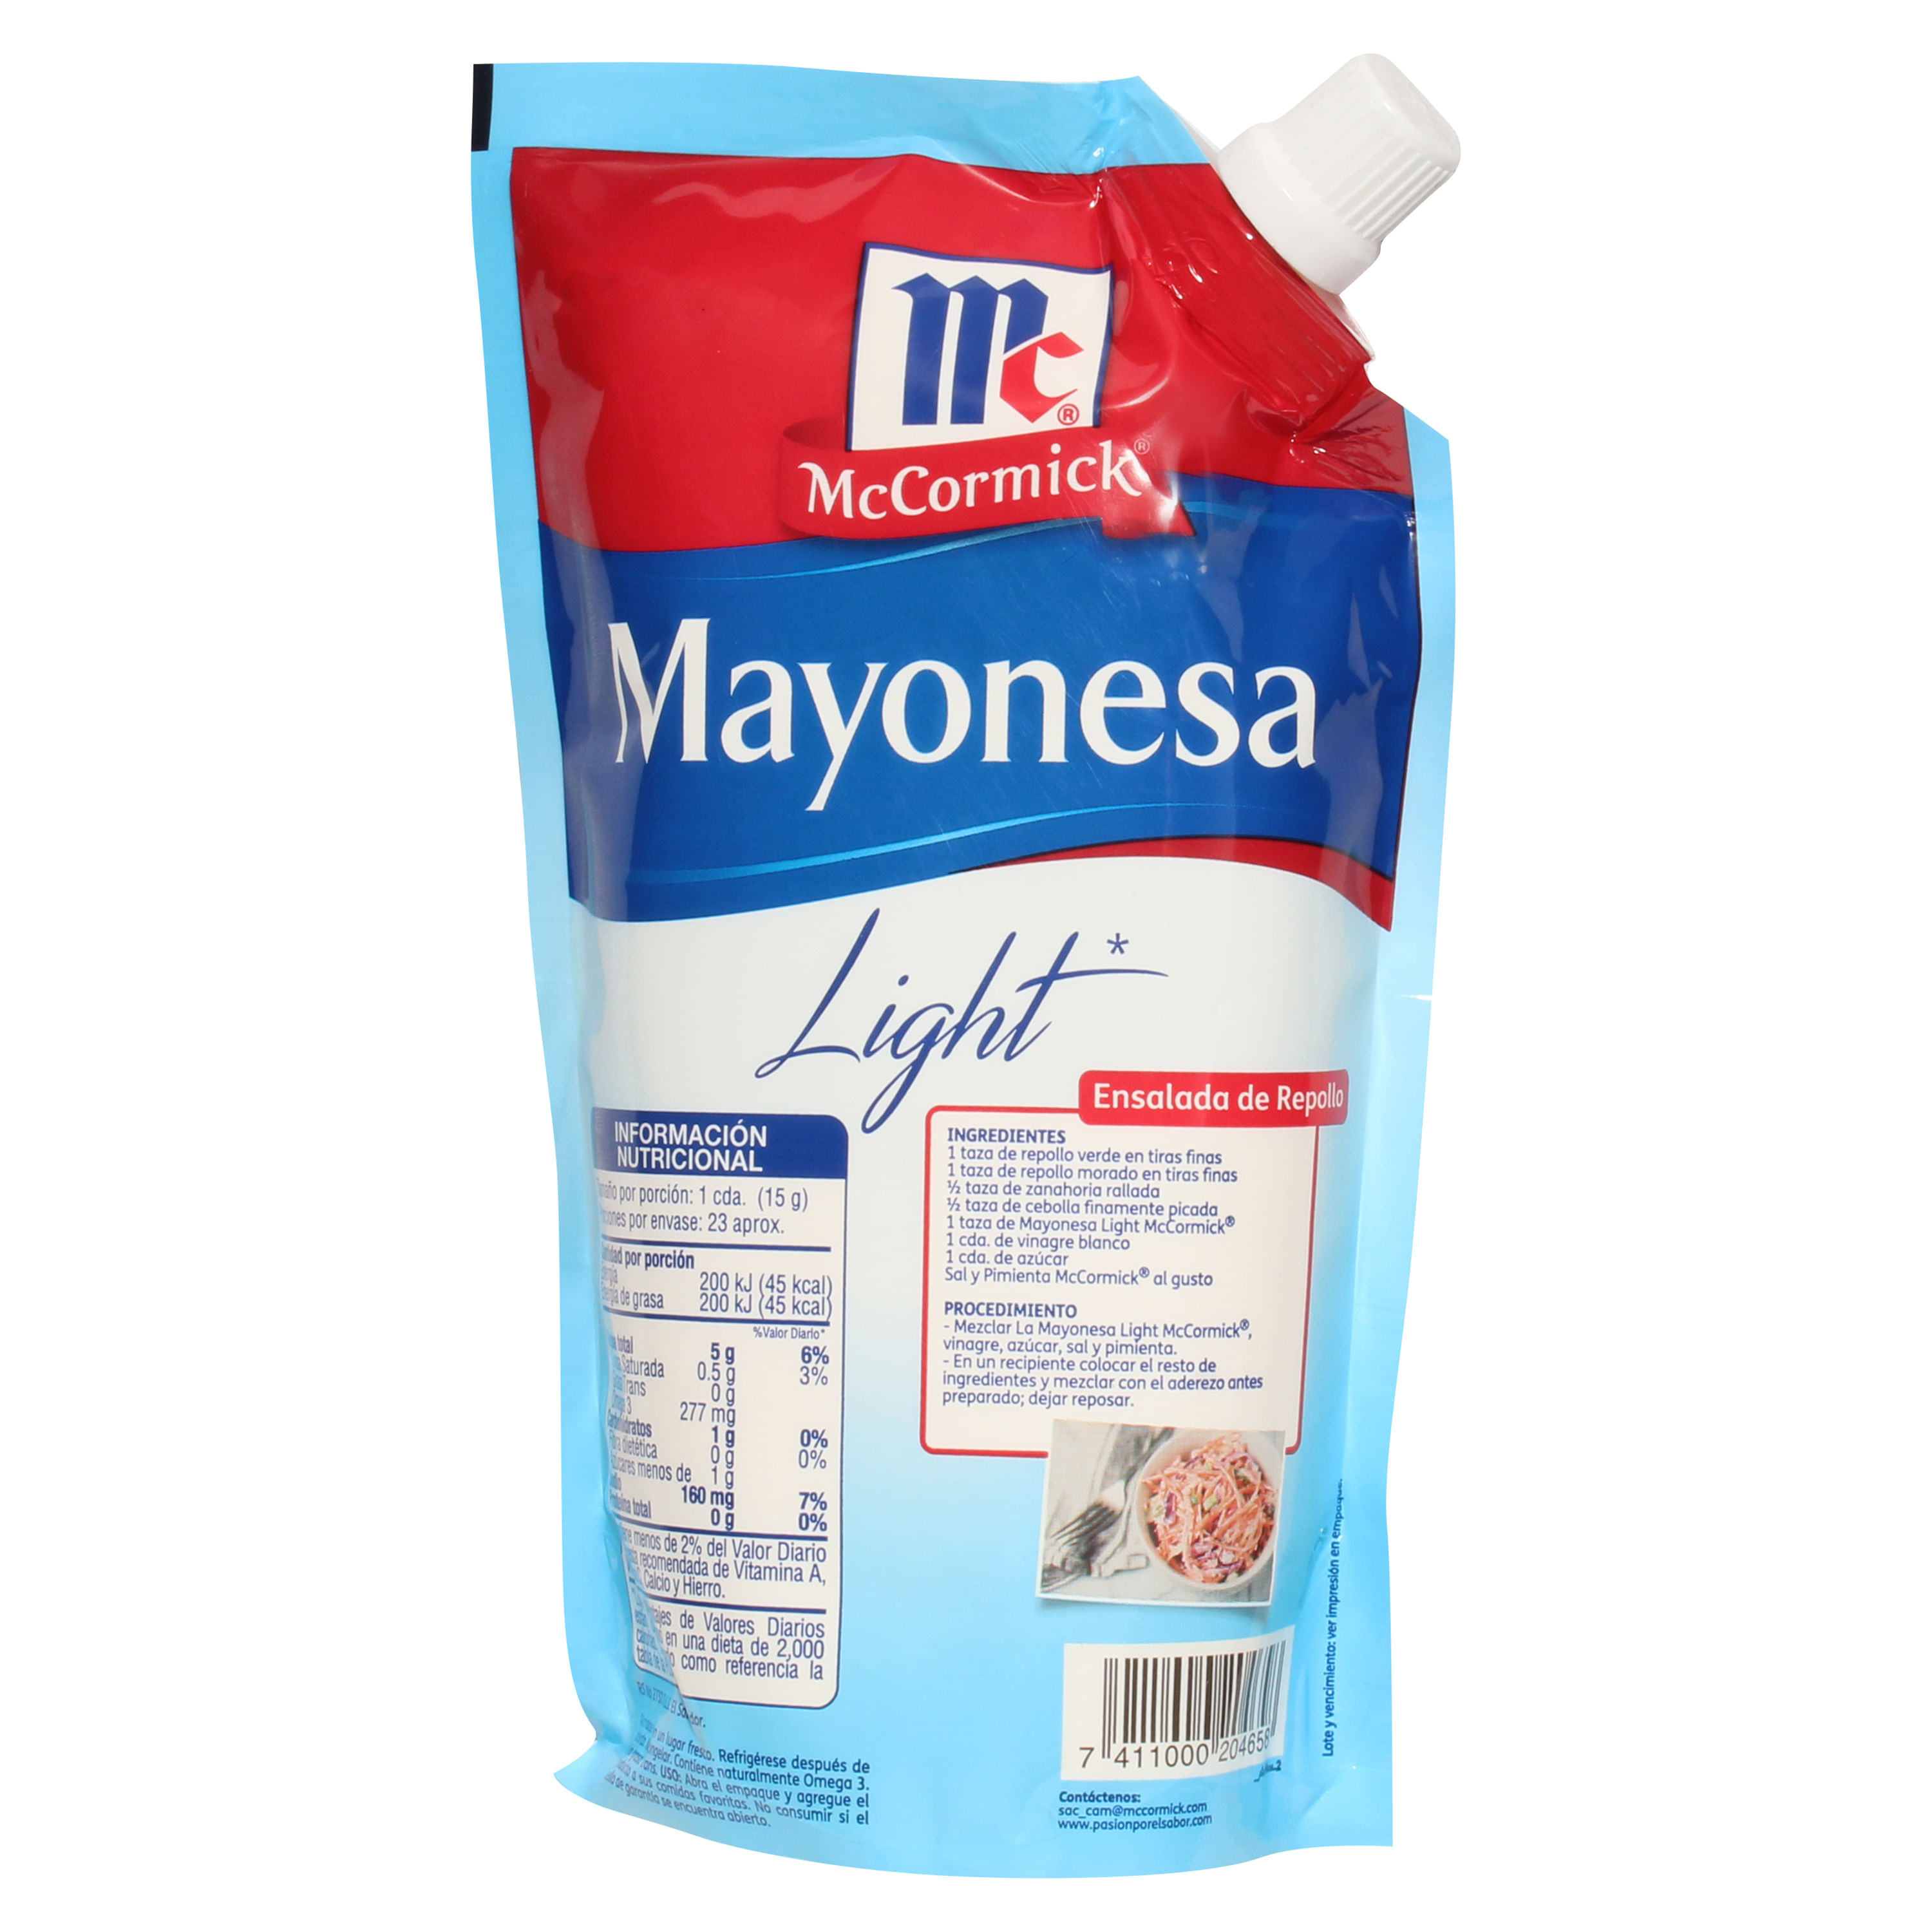 Mayonesa mccormick light - 207 g